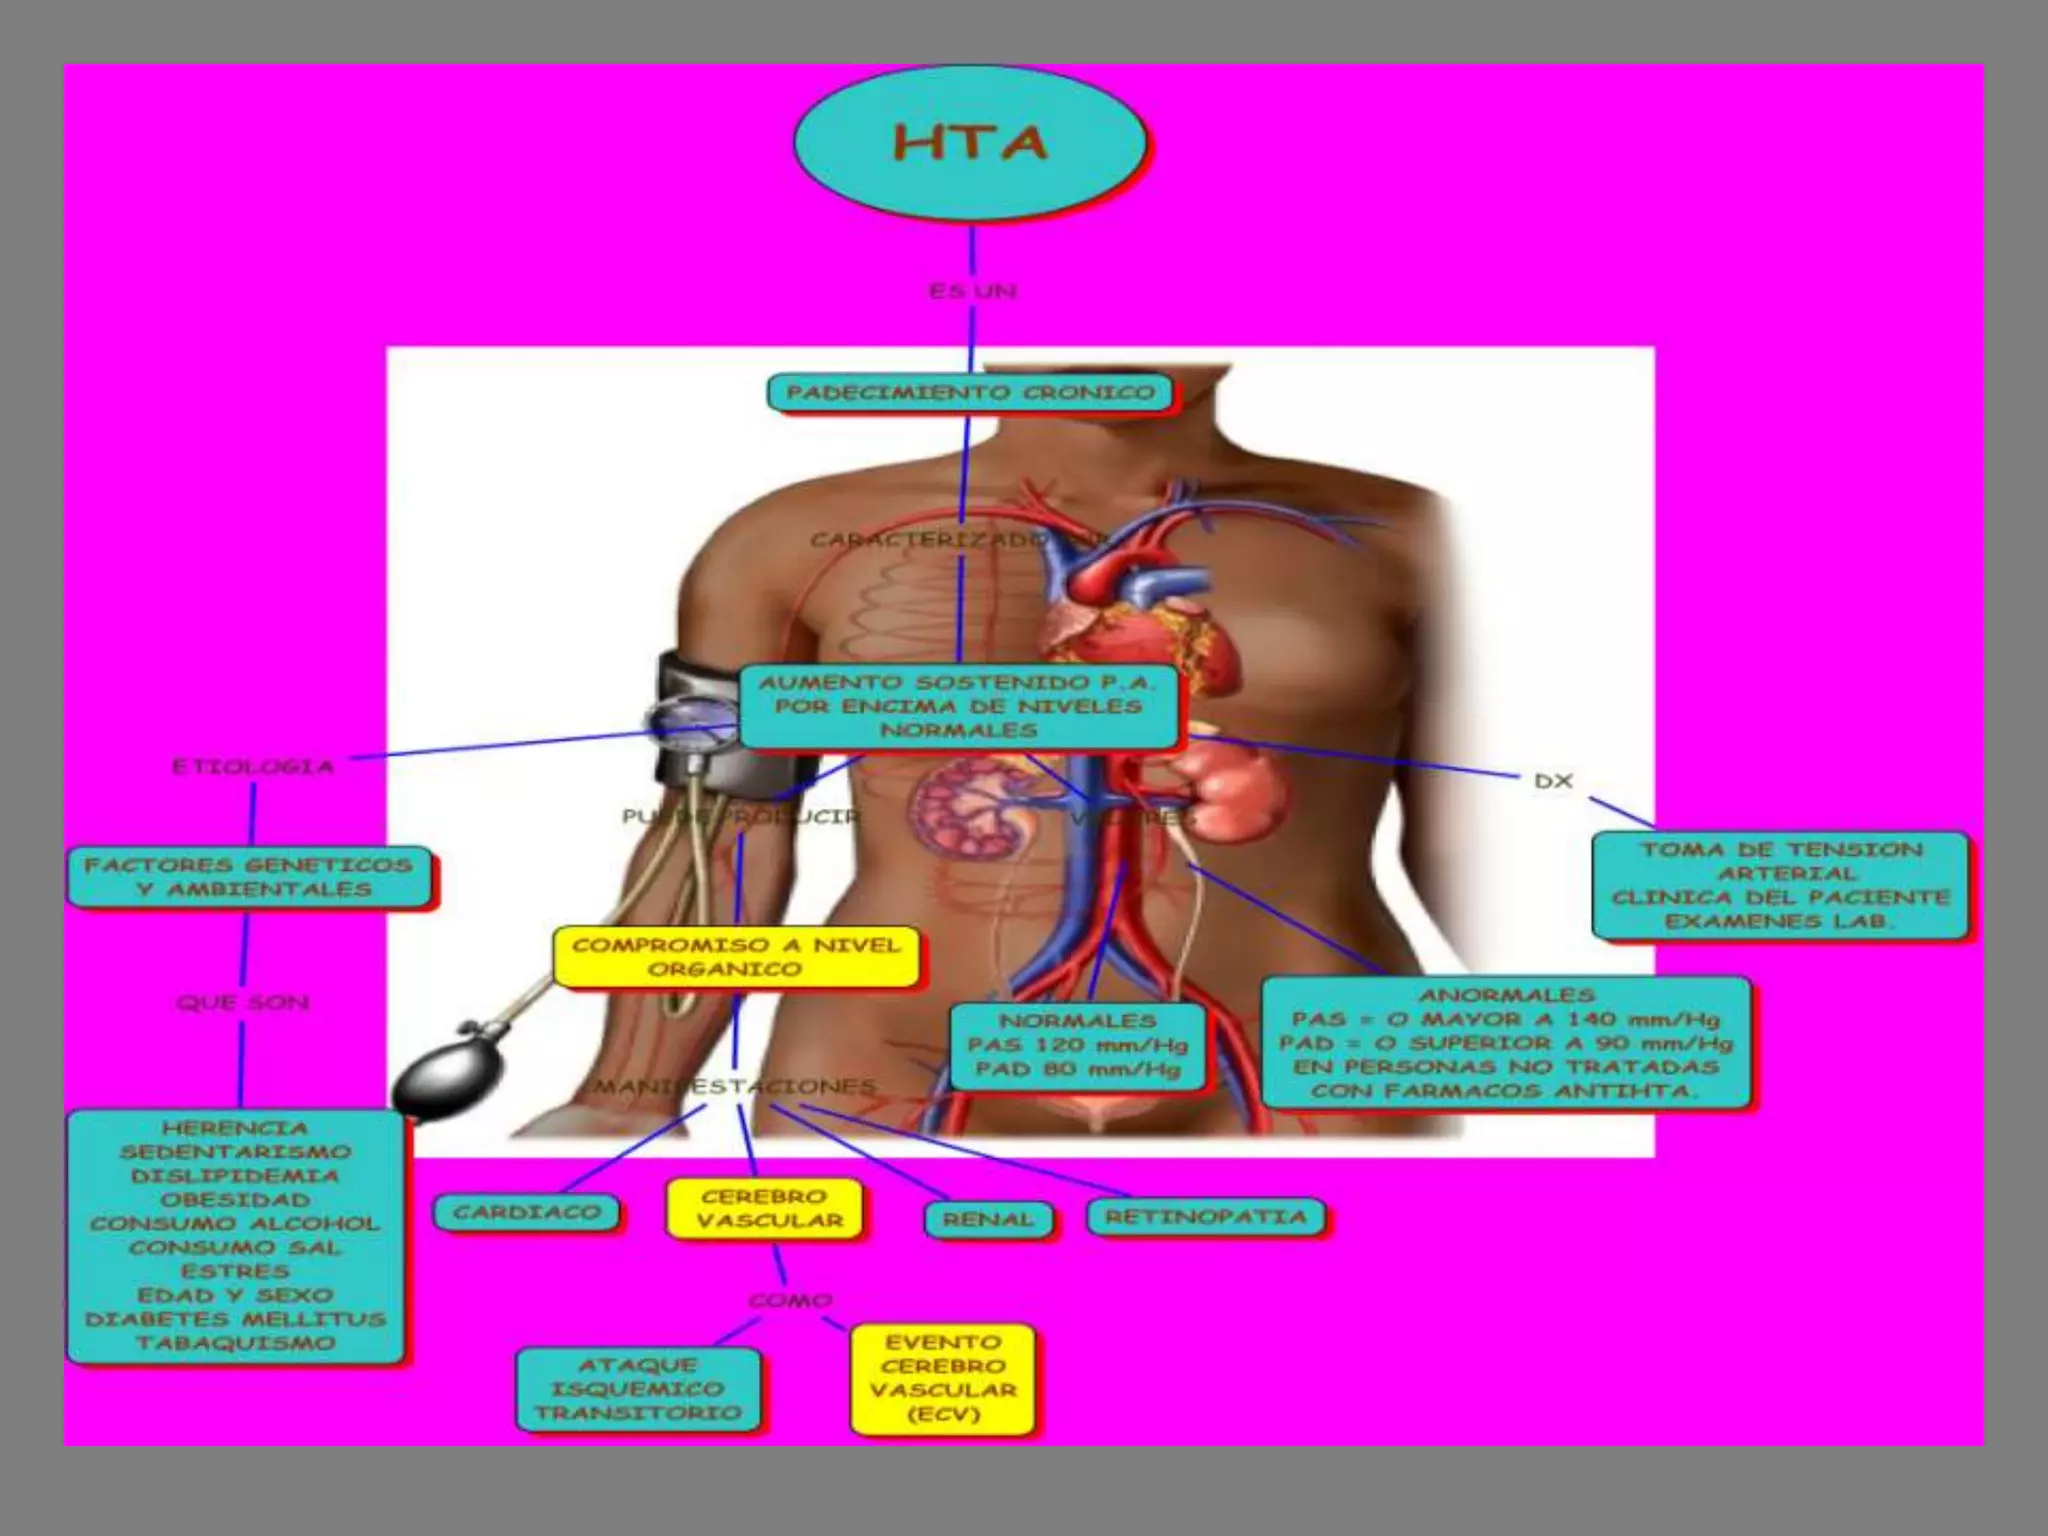 Mapa conceptual hipertension arterial (hta)